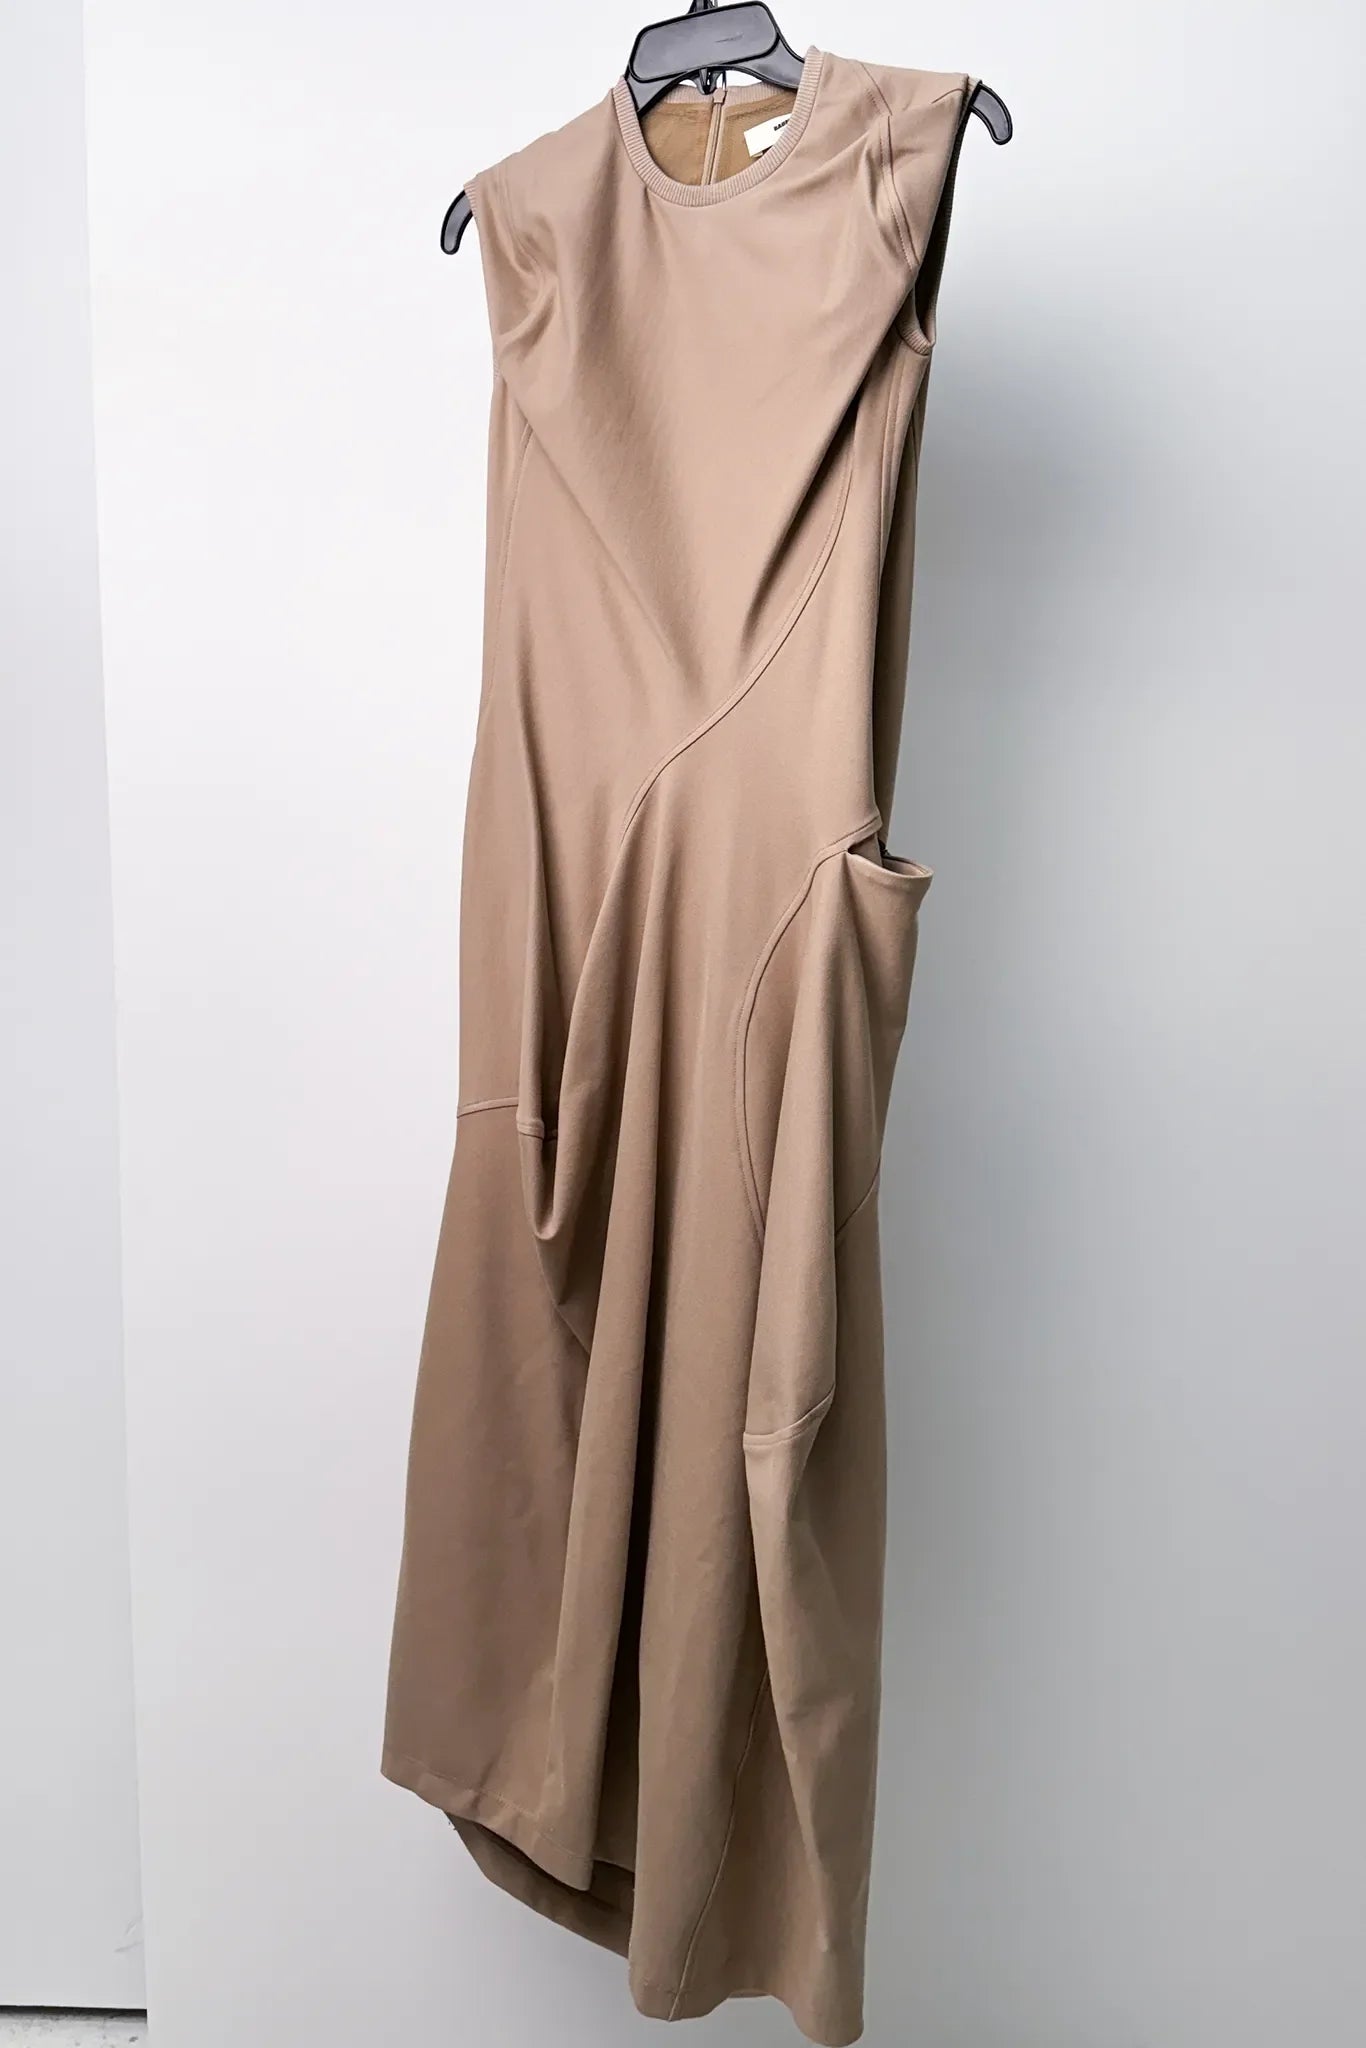 light brown asymmetrical knit dress